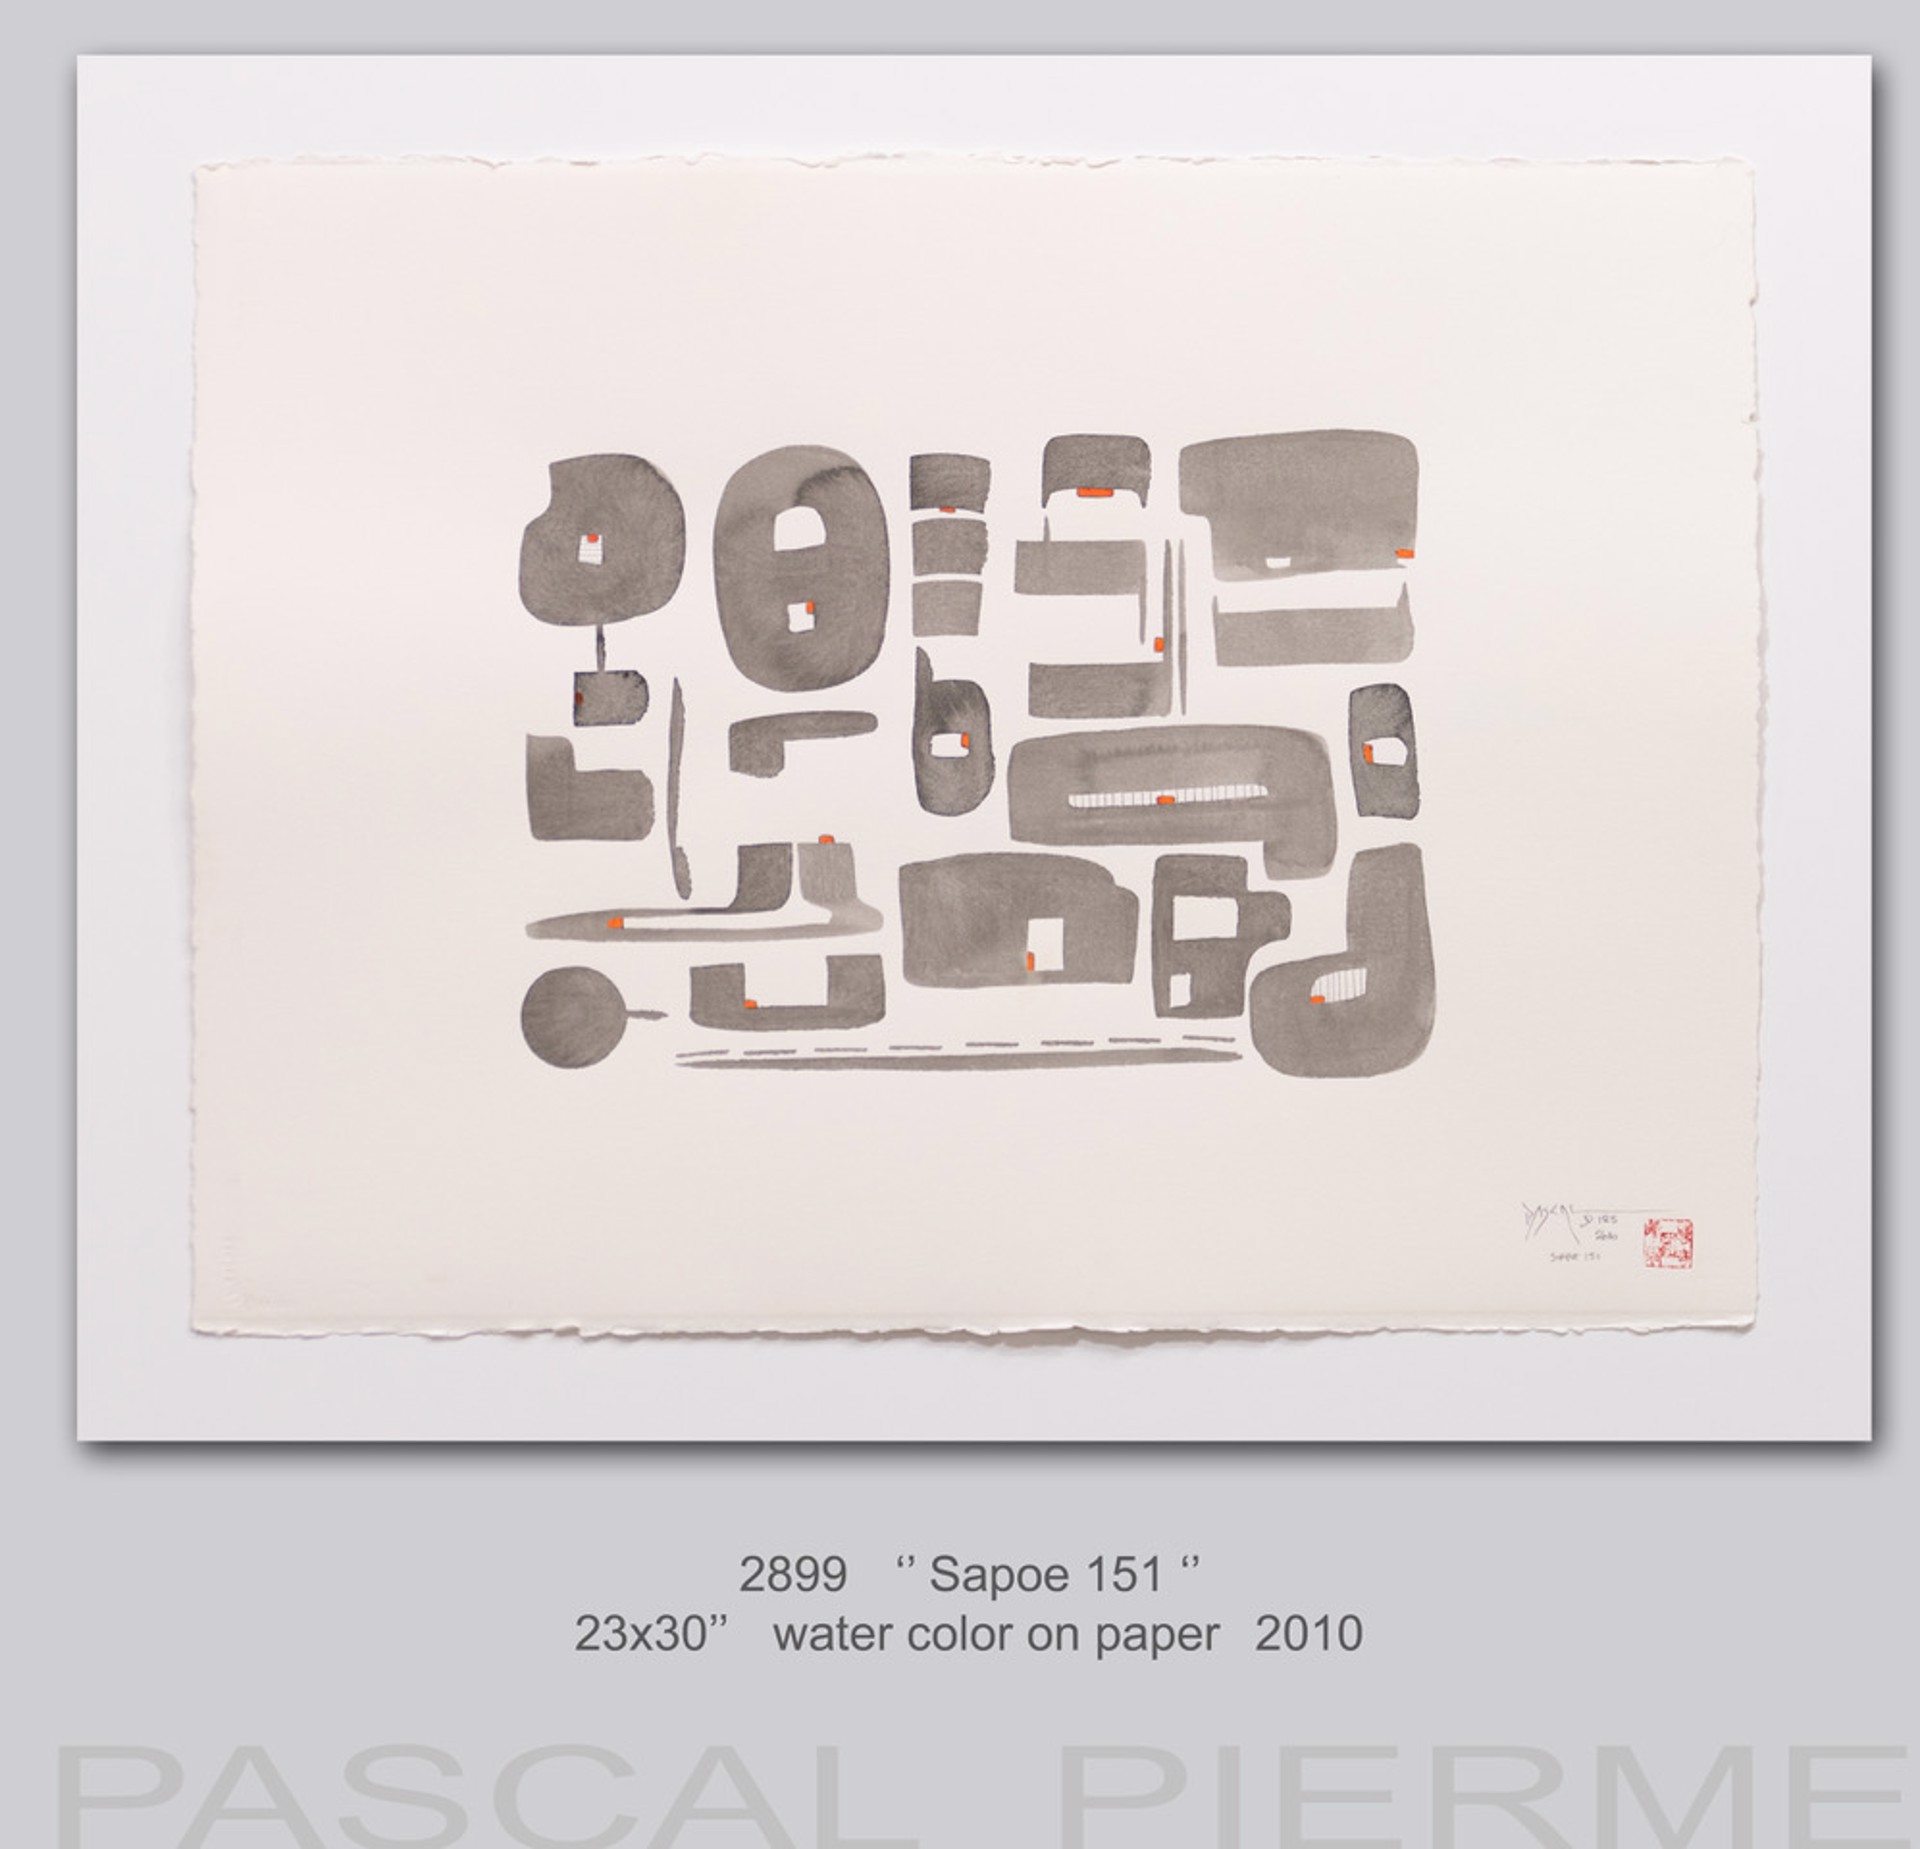 SAPOE 151 by Pascal Piermé